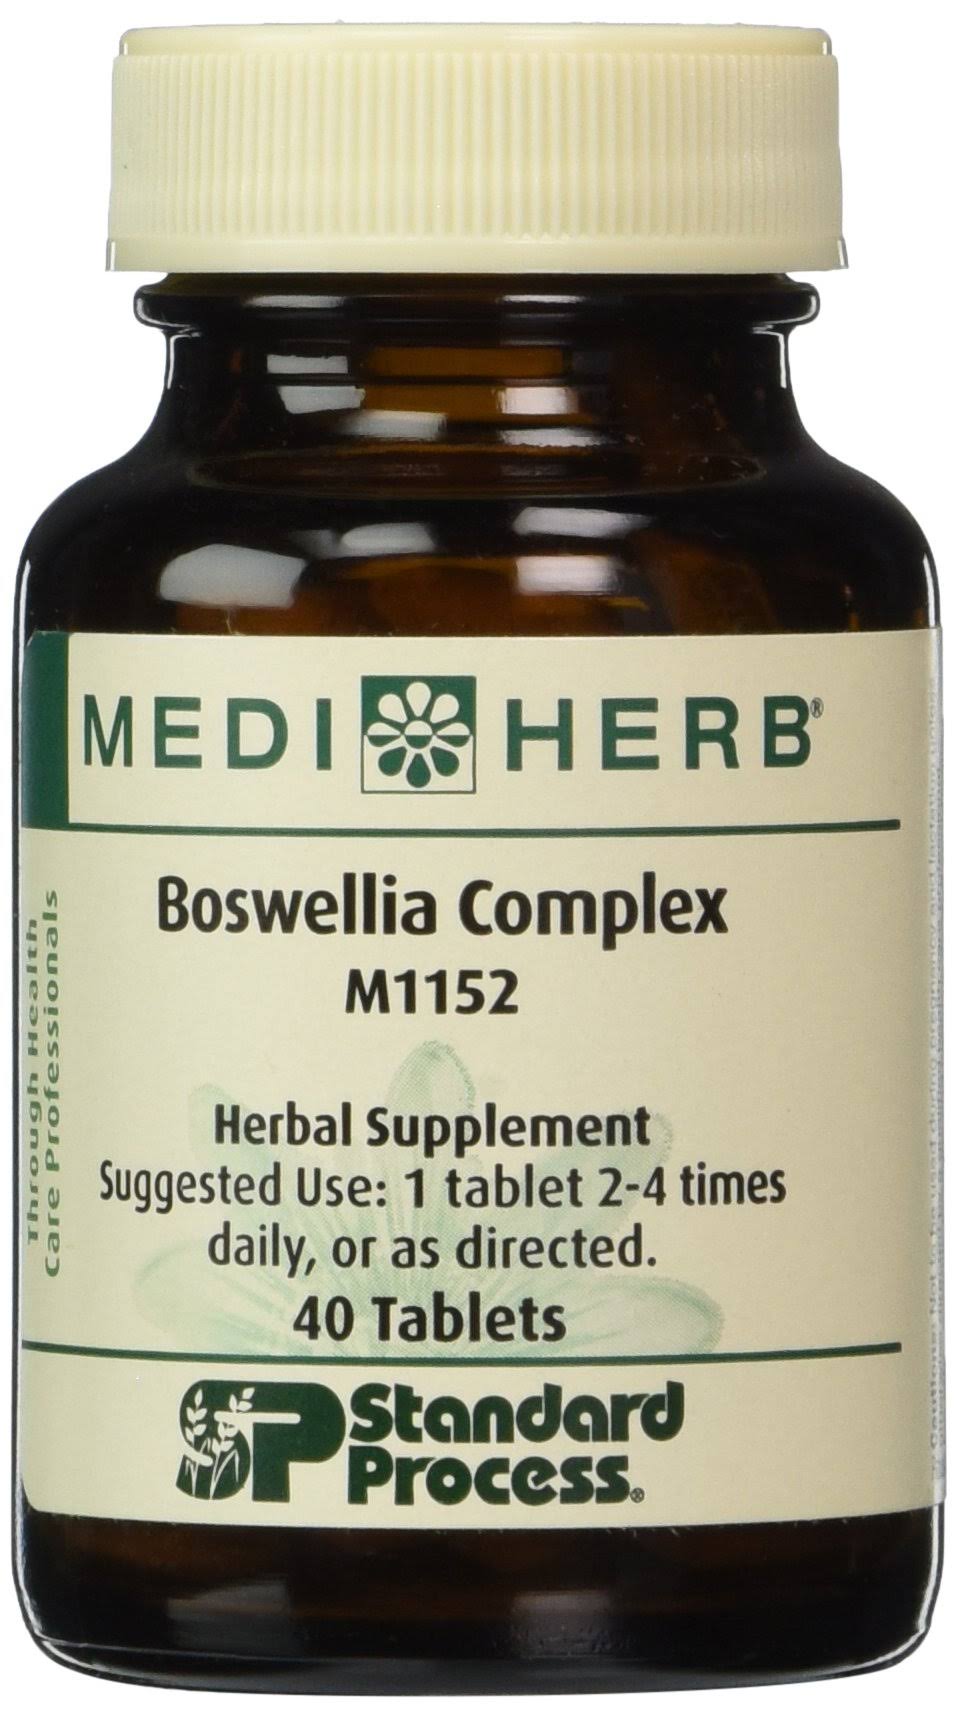 Standard Process Mediherb Boswellia Complex M1152 Herbal Supplement - 40 Tablets